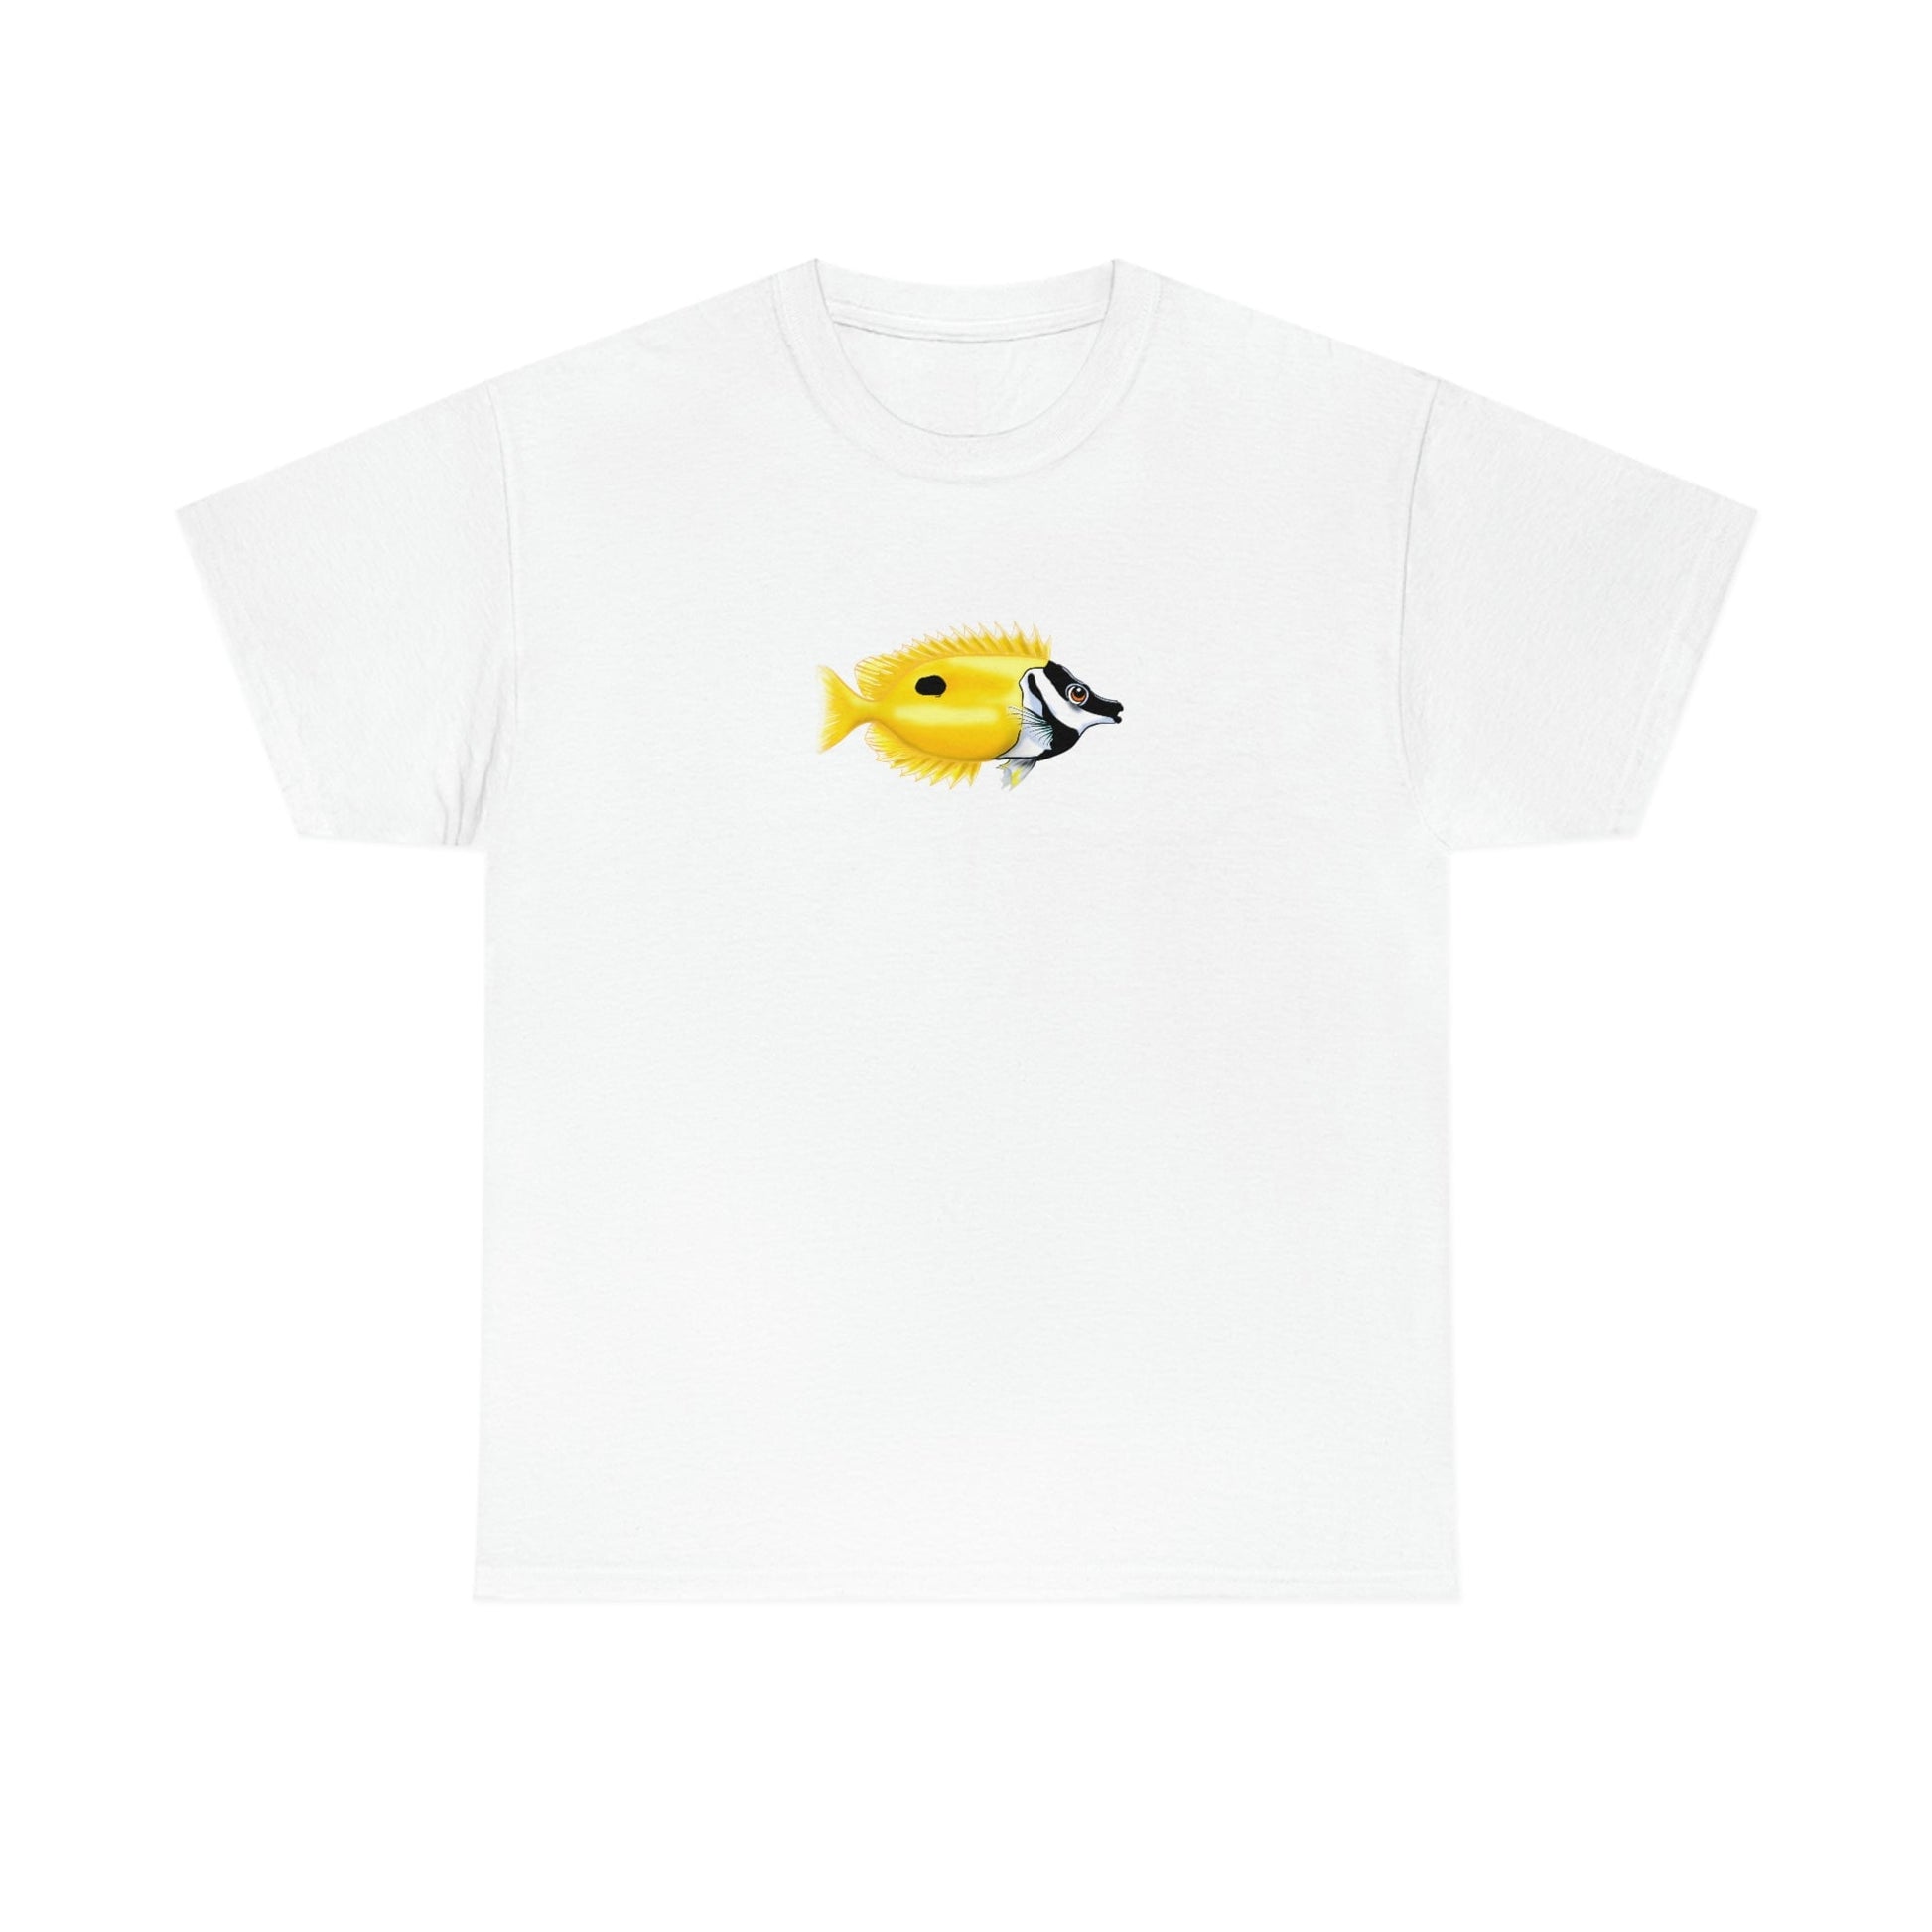 Simple Fox Face Fish Shirt - Reef of Clowns